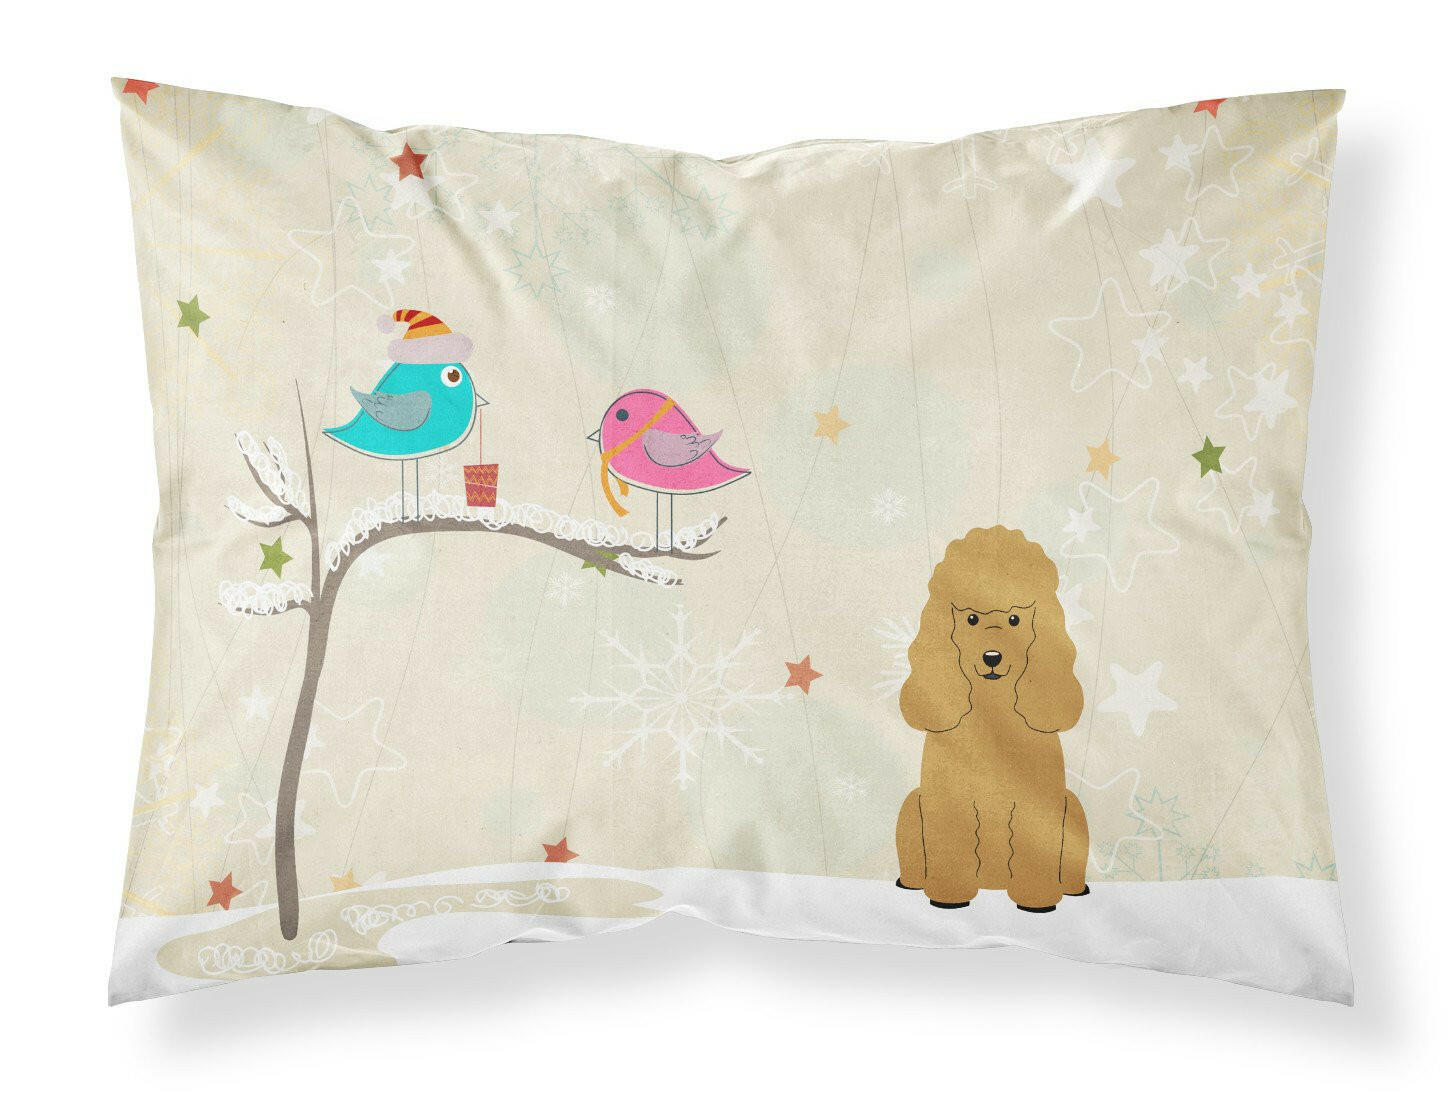 Christmas Presents between Friends Poodle Tan Fabric Standard Pillowcase BB2541PILLOWCASE by Caroline's Treasures